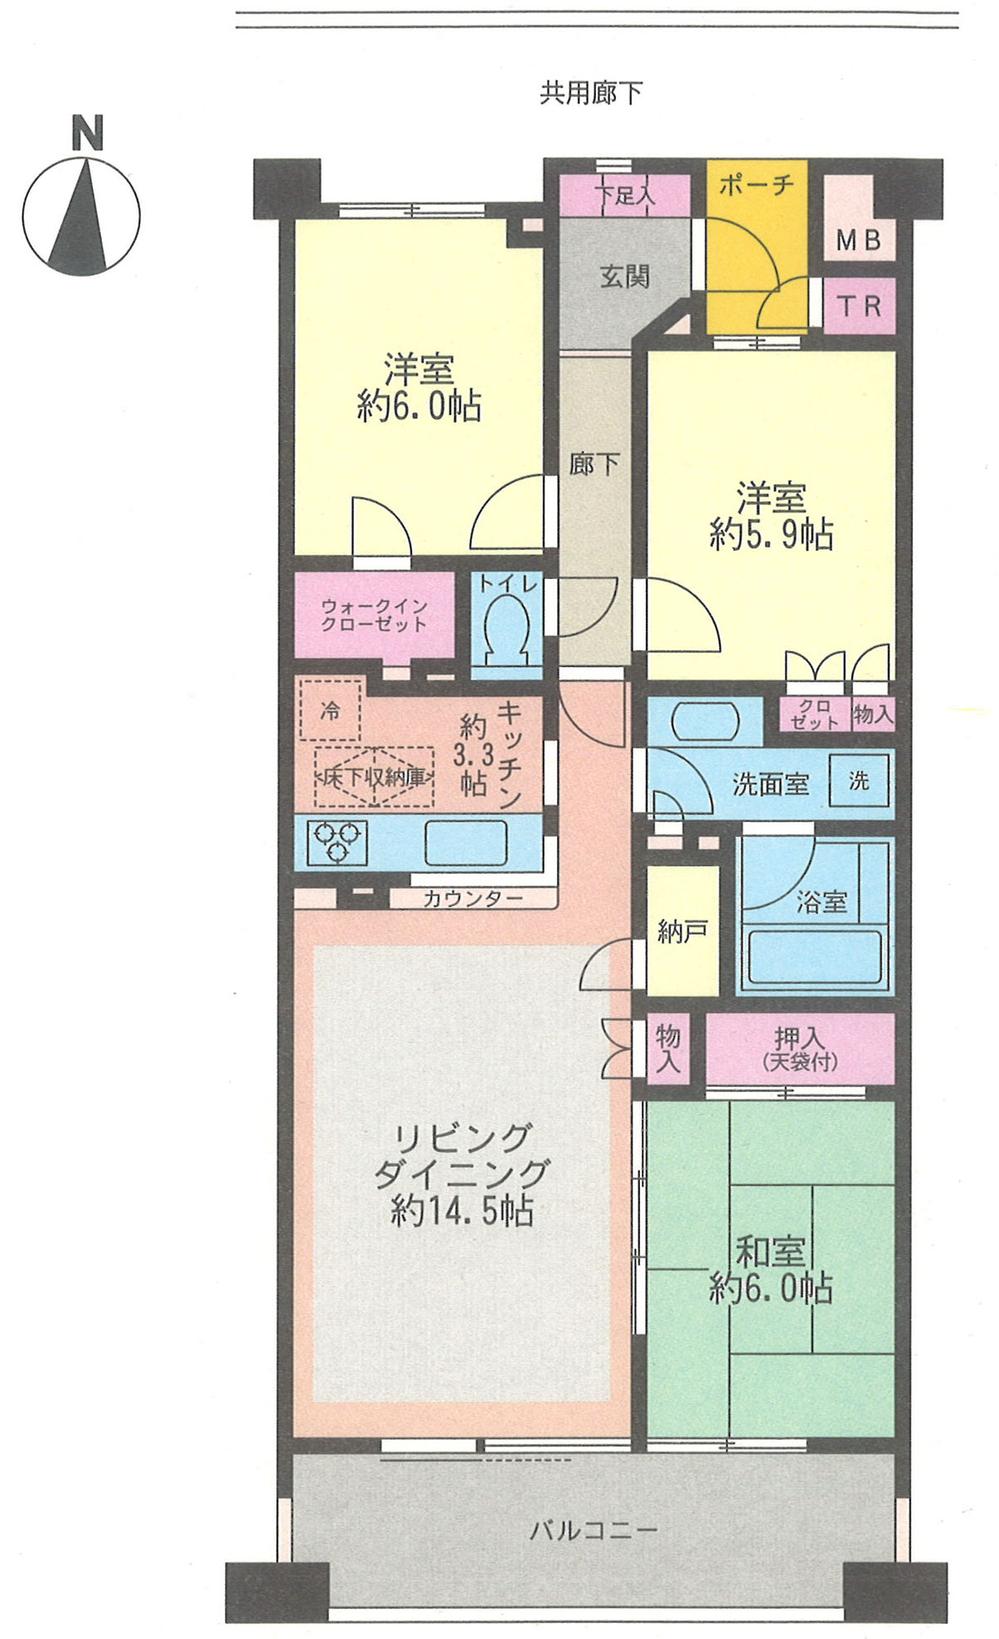 Floor plan. 3LDK, Price 29.5 million yen, Occupied area 79.17 sq m , Balcony area 10.98 sq m